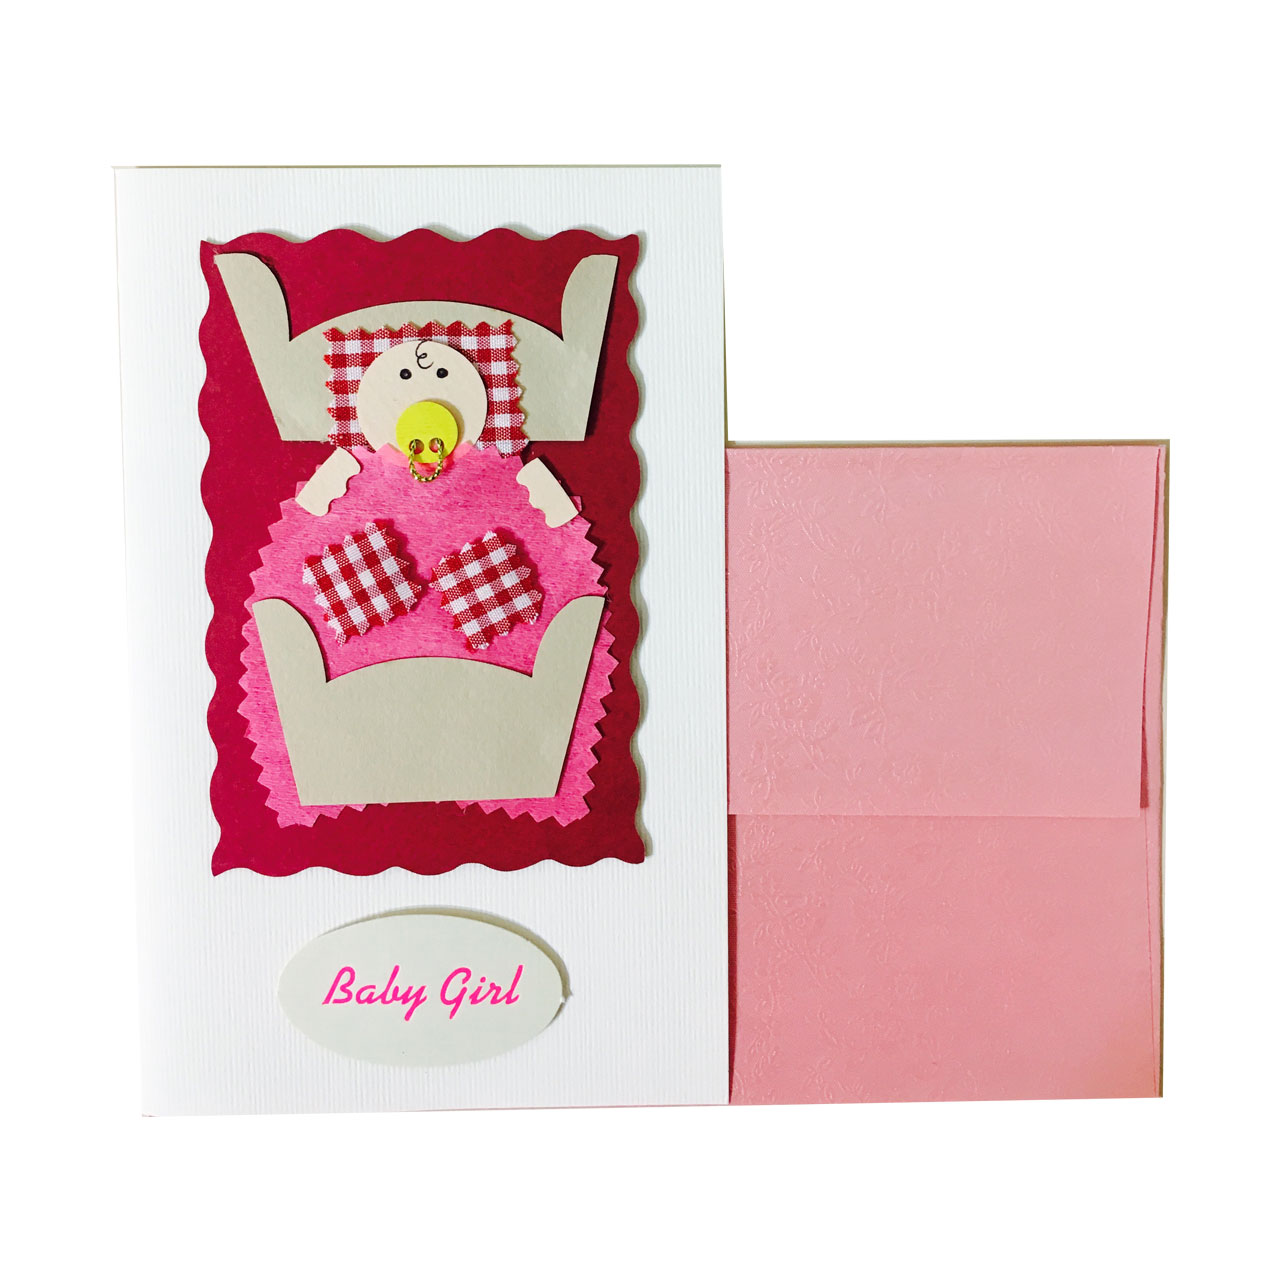 کارت پستال دست ساز مدل Baby Girl